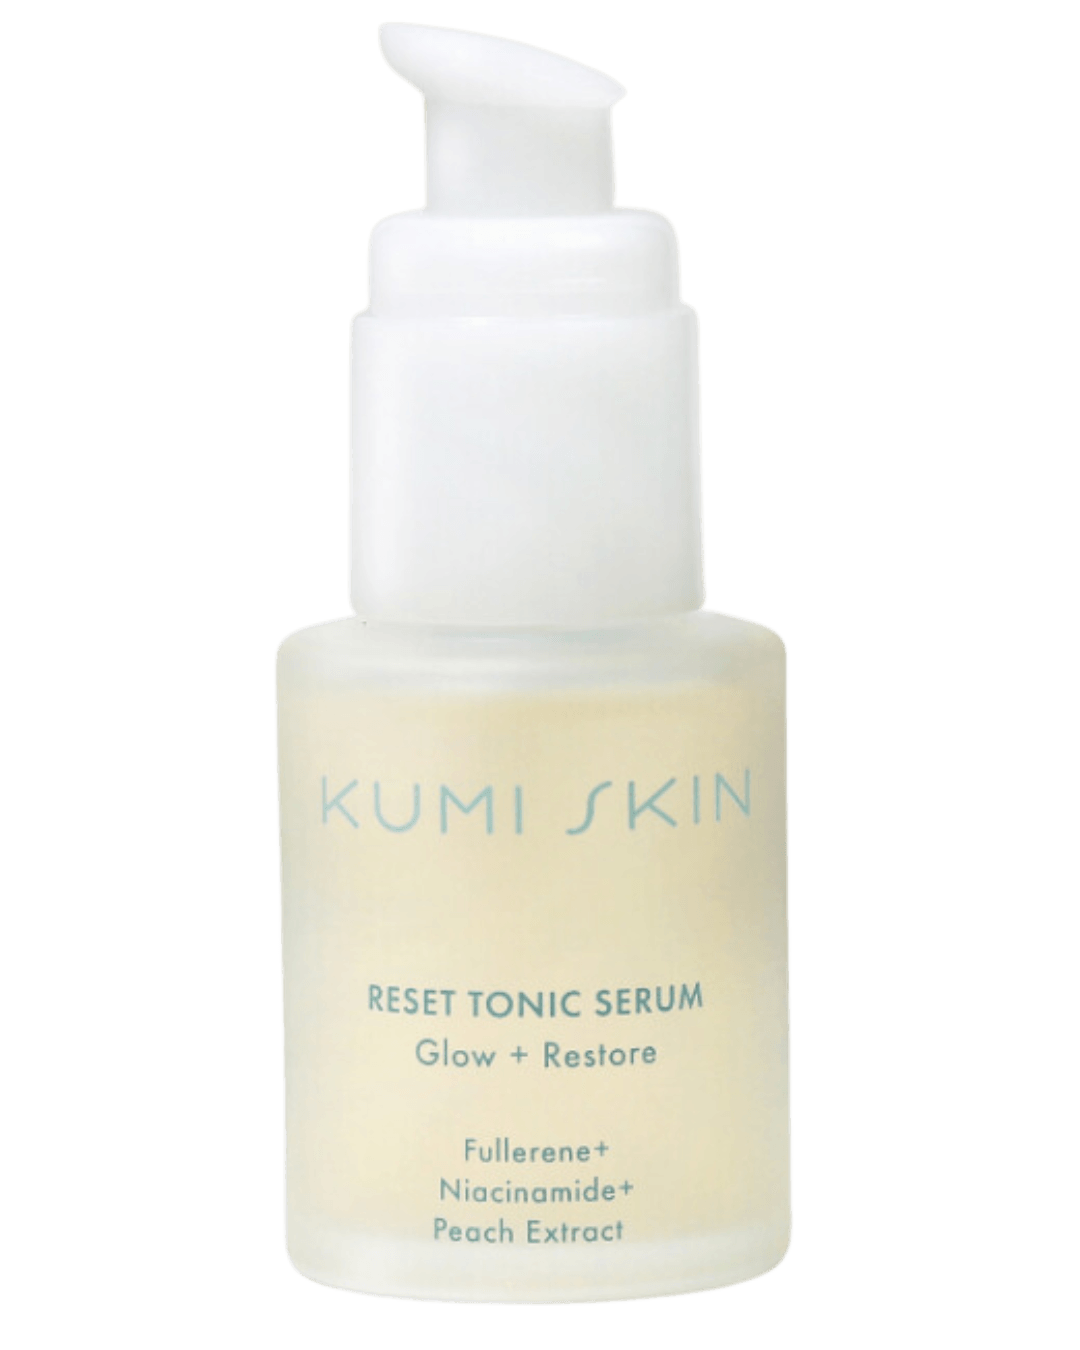 Daily Vanity Beauty Awards 2024 Best Skincare KUMI SKIN Reset Tonic Serum Voted By Beauty Experts